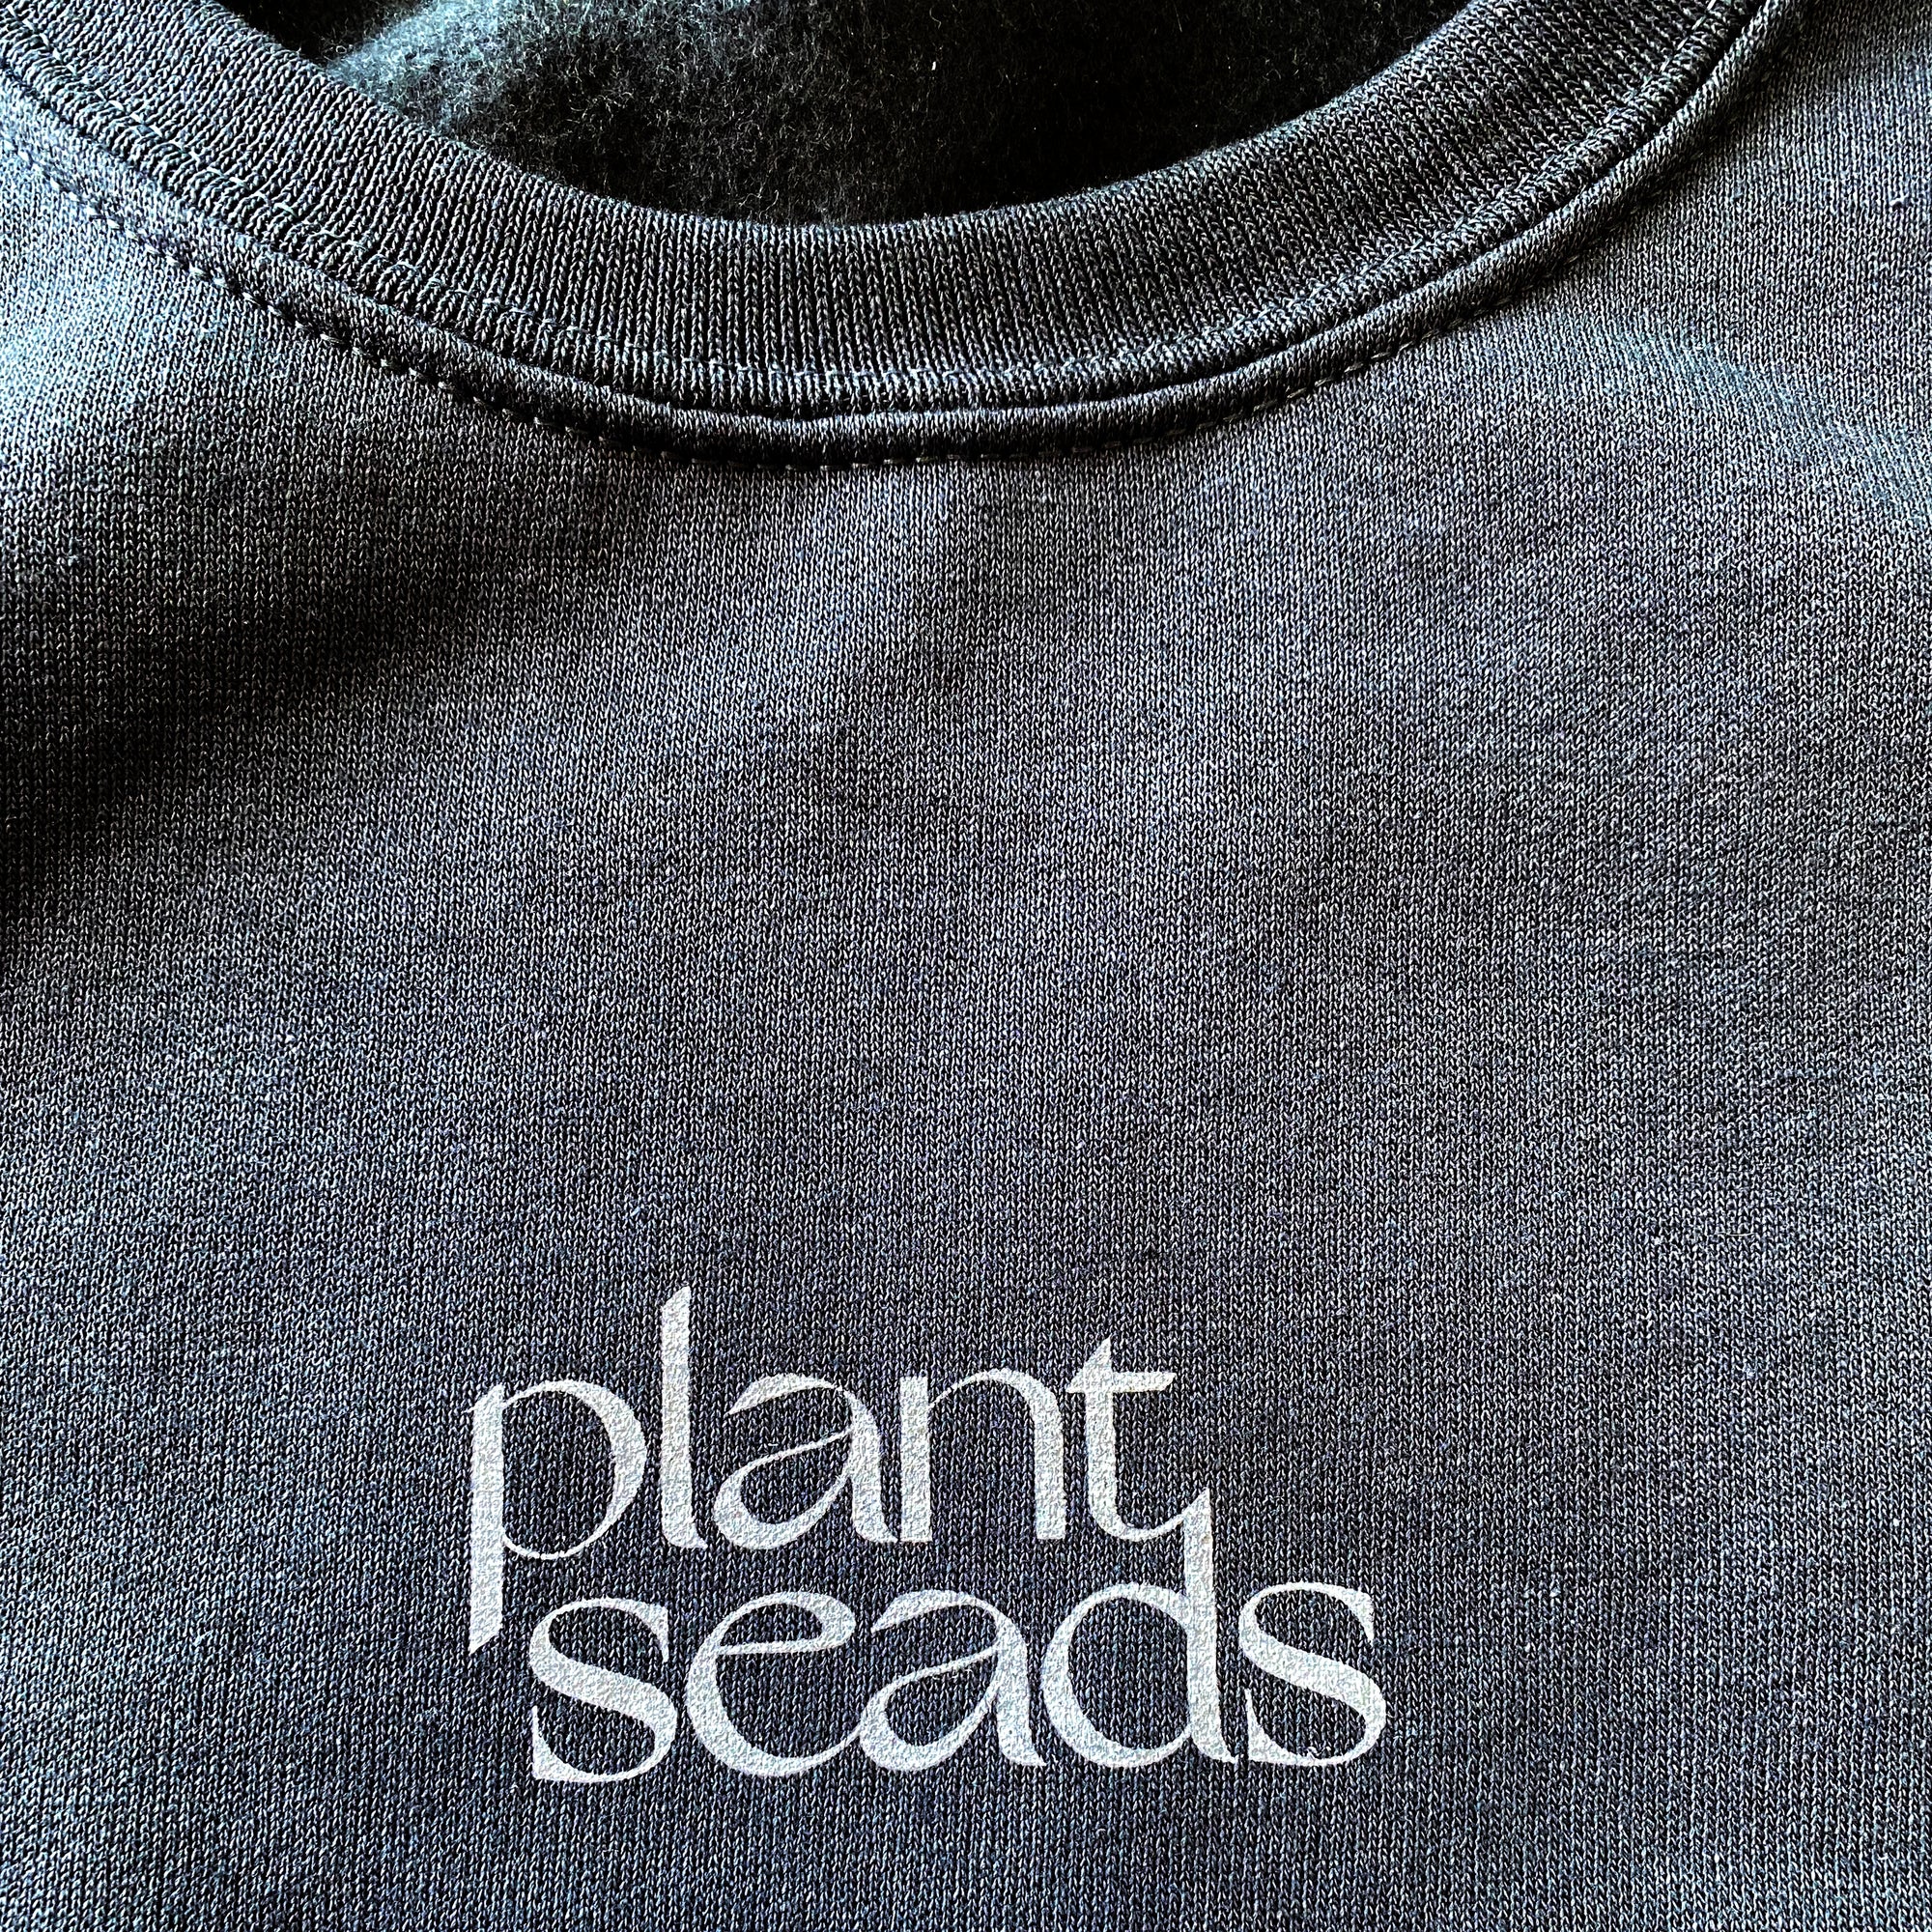 Plant Seads Sweatshirt